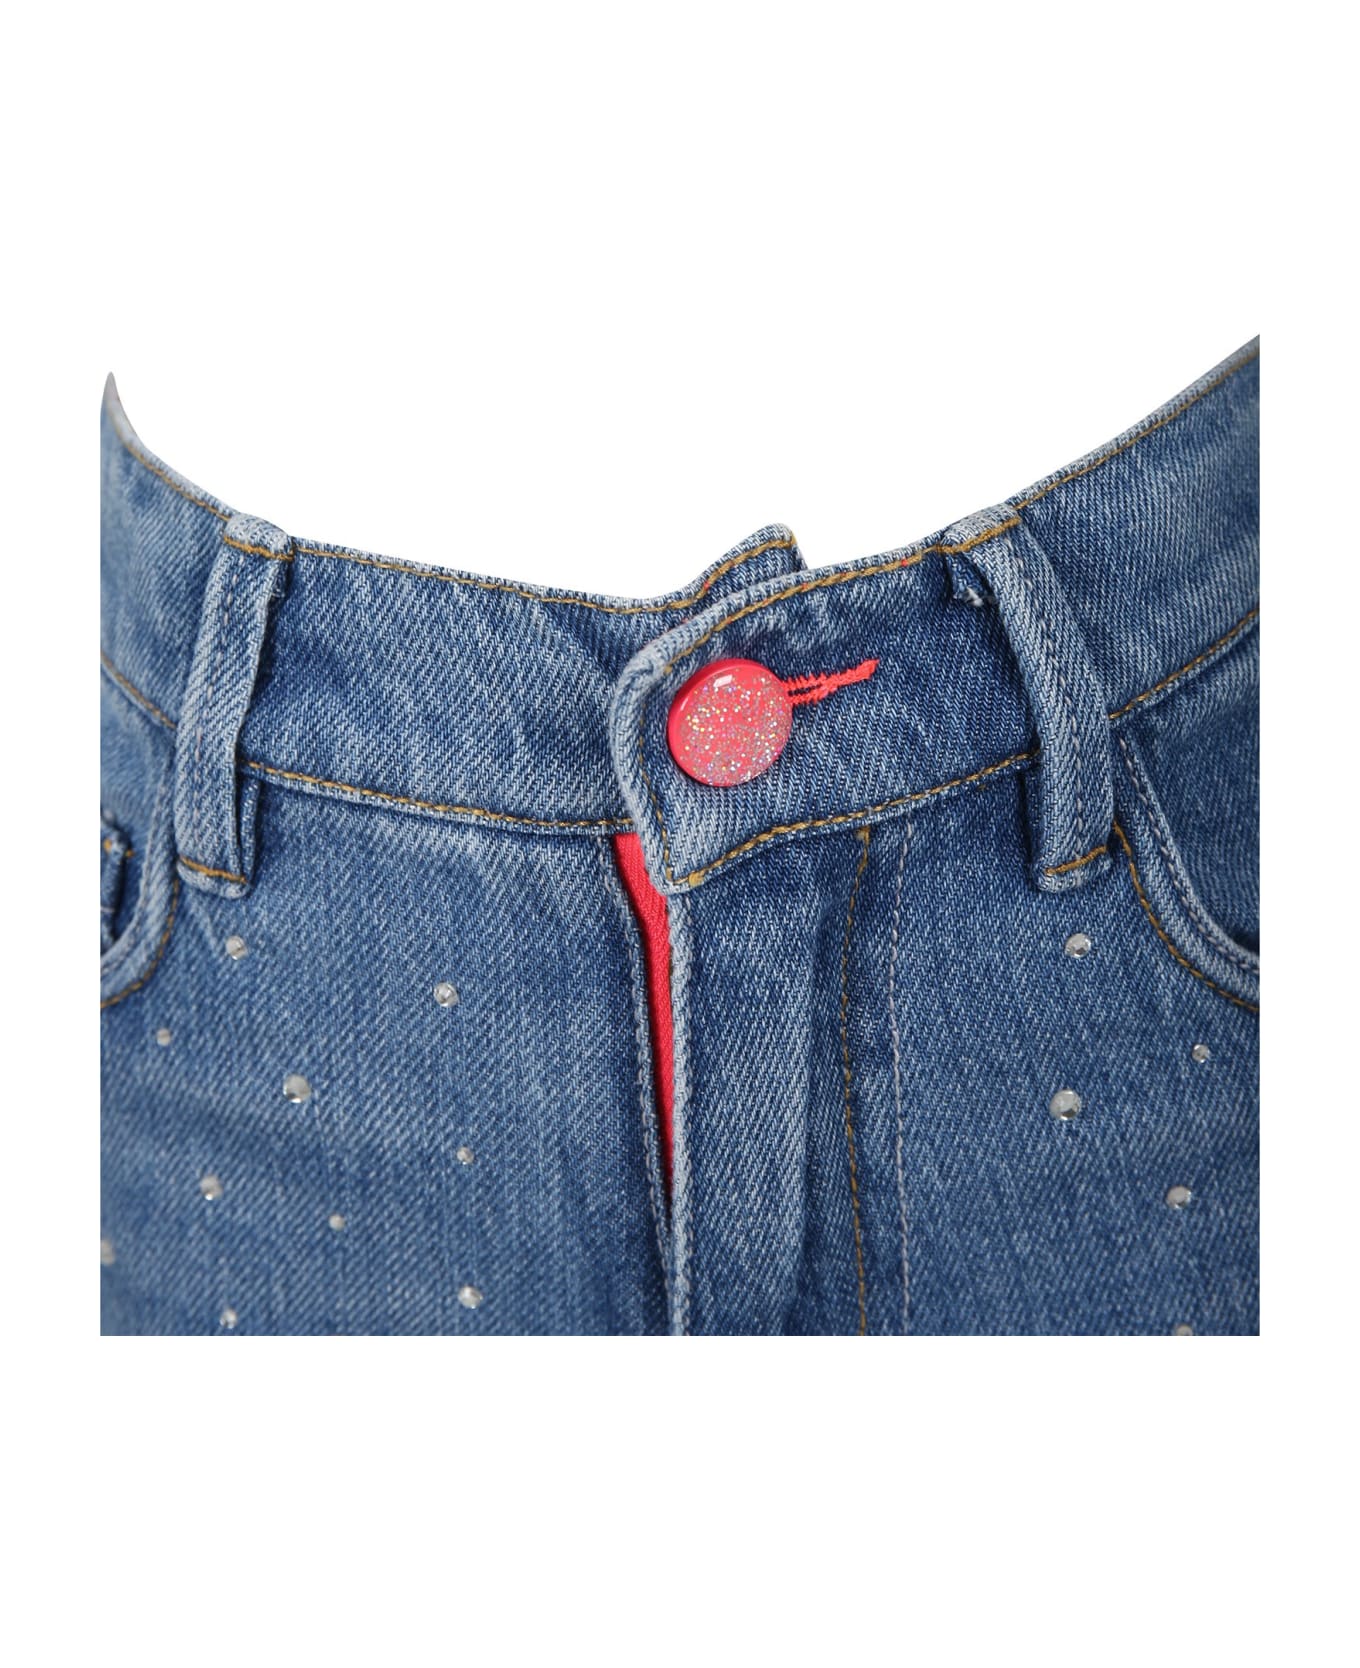 Billieblush Denim Jeans For Girls With Studs - Denim